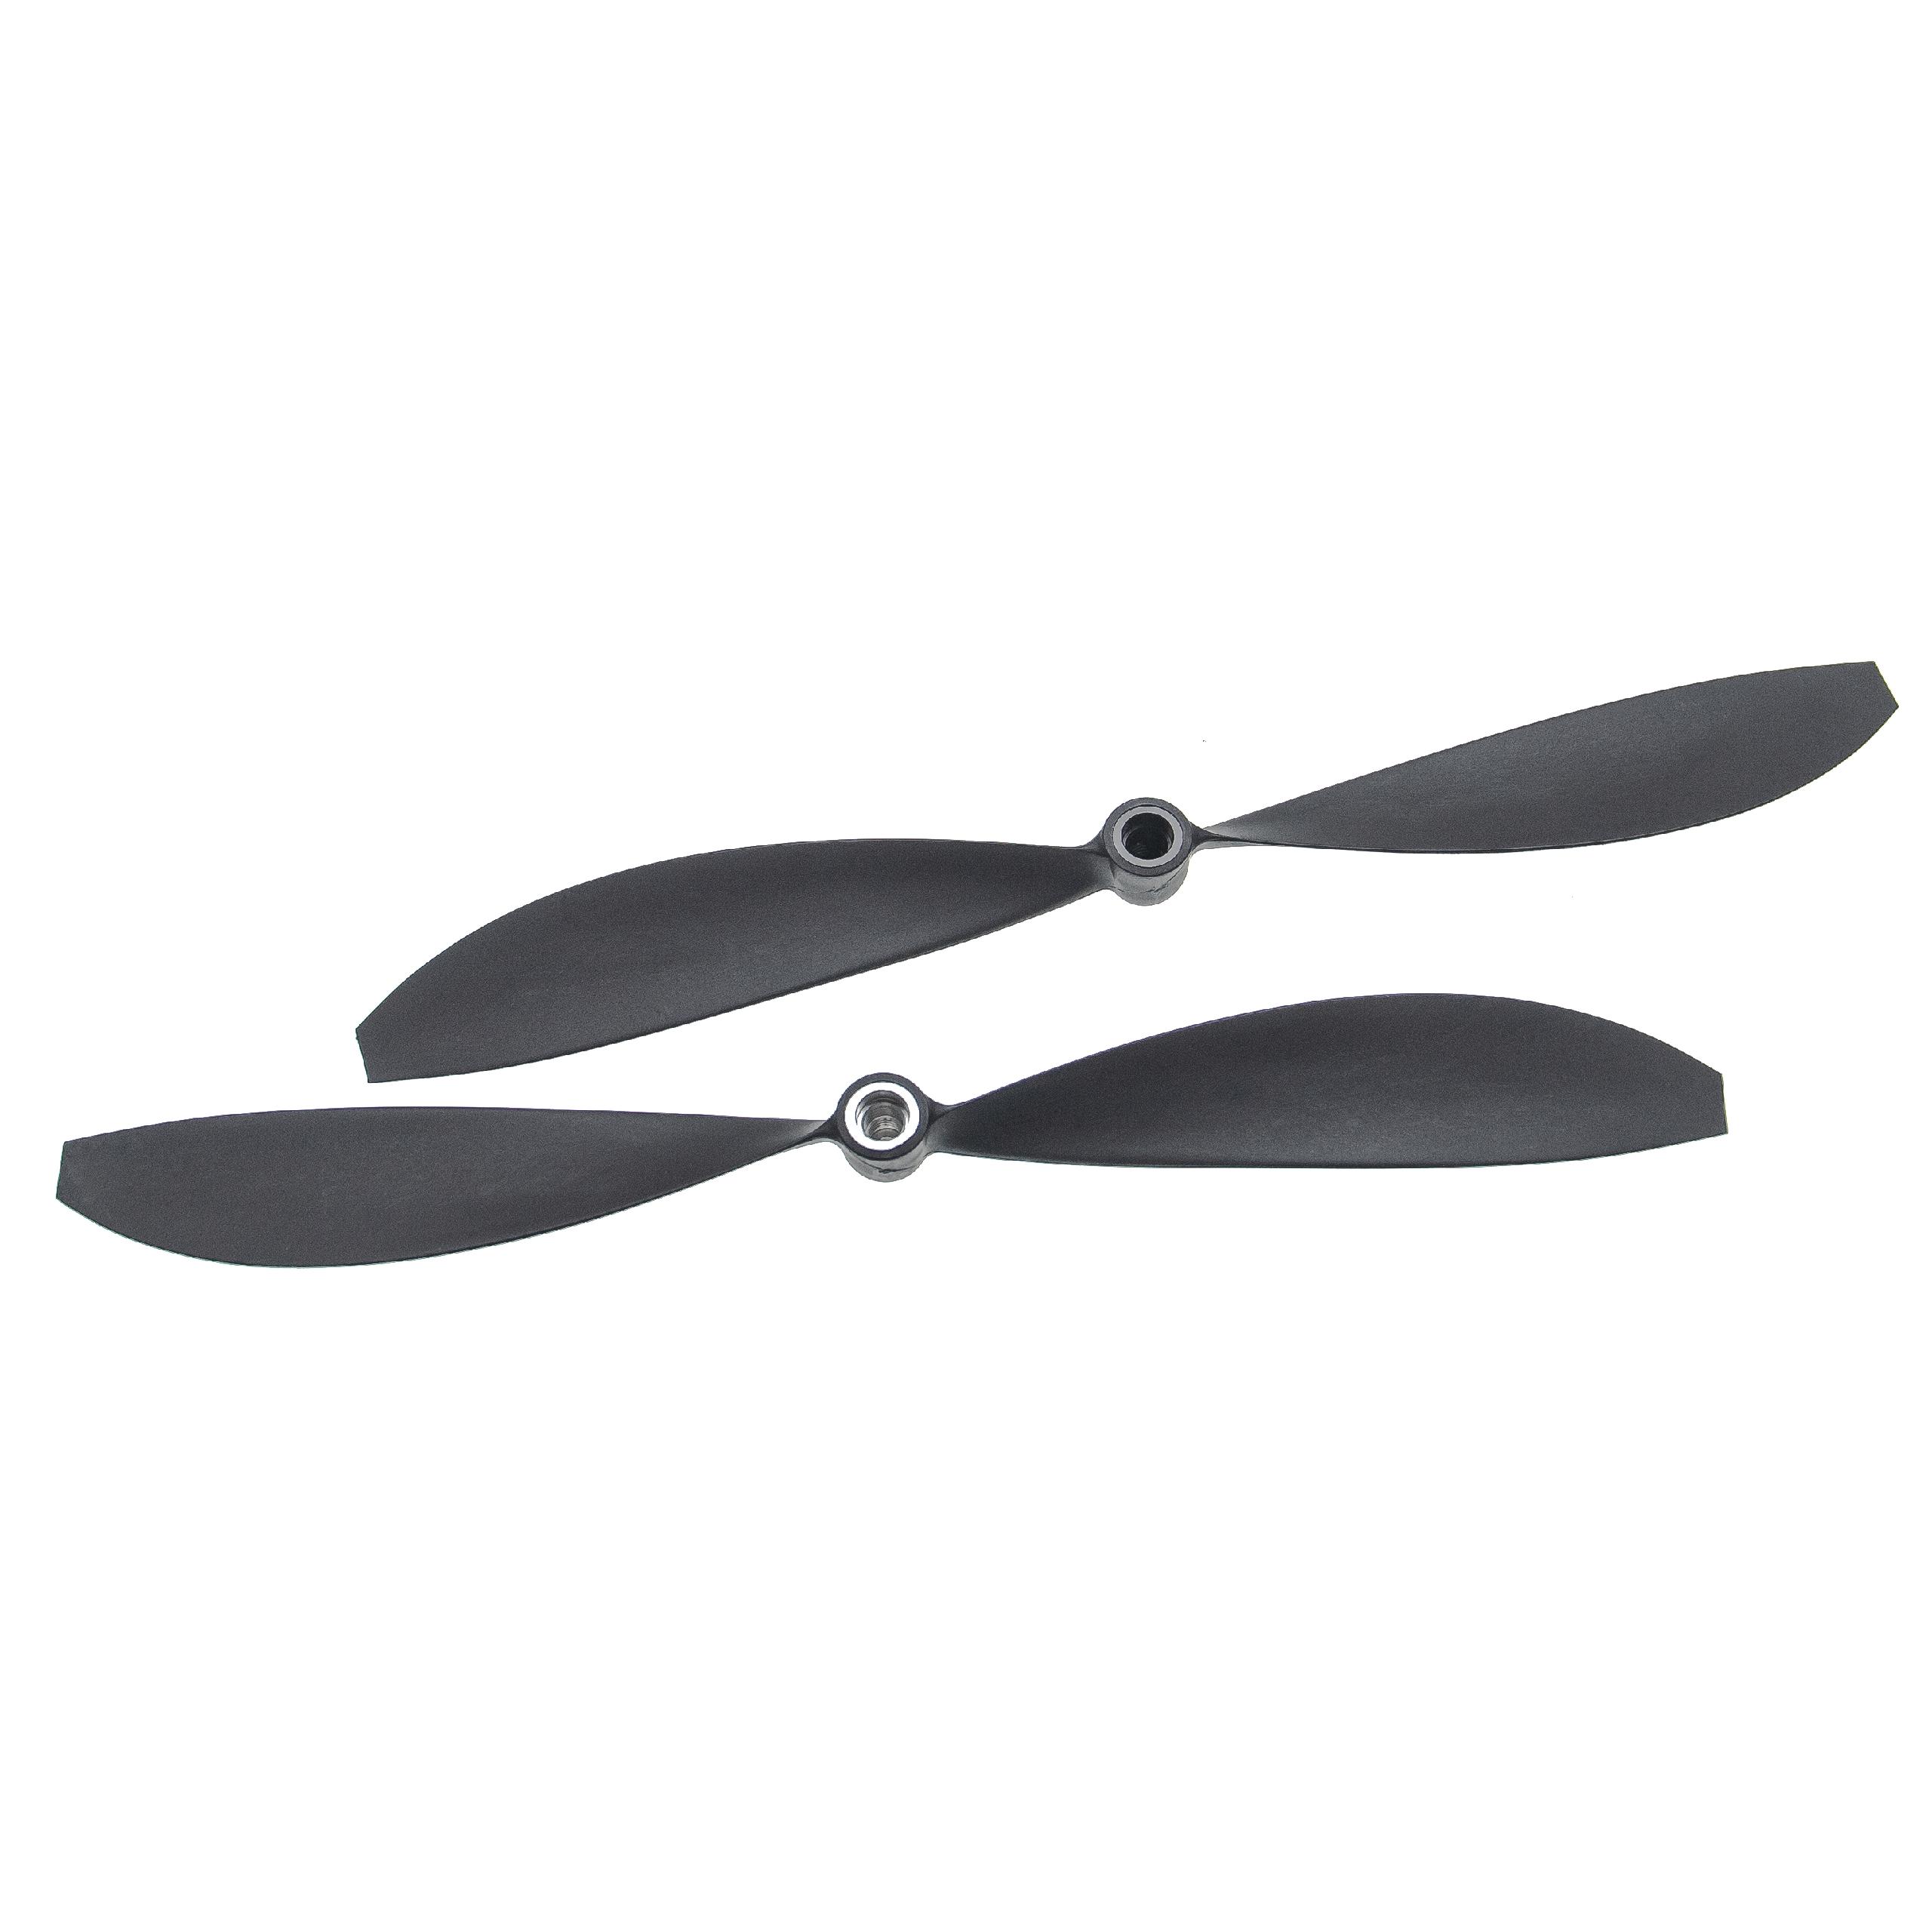 2x Propeller suitable for GoPro Karma Drone - Self-Locking, Black